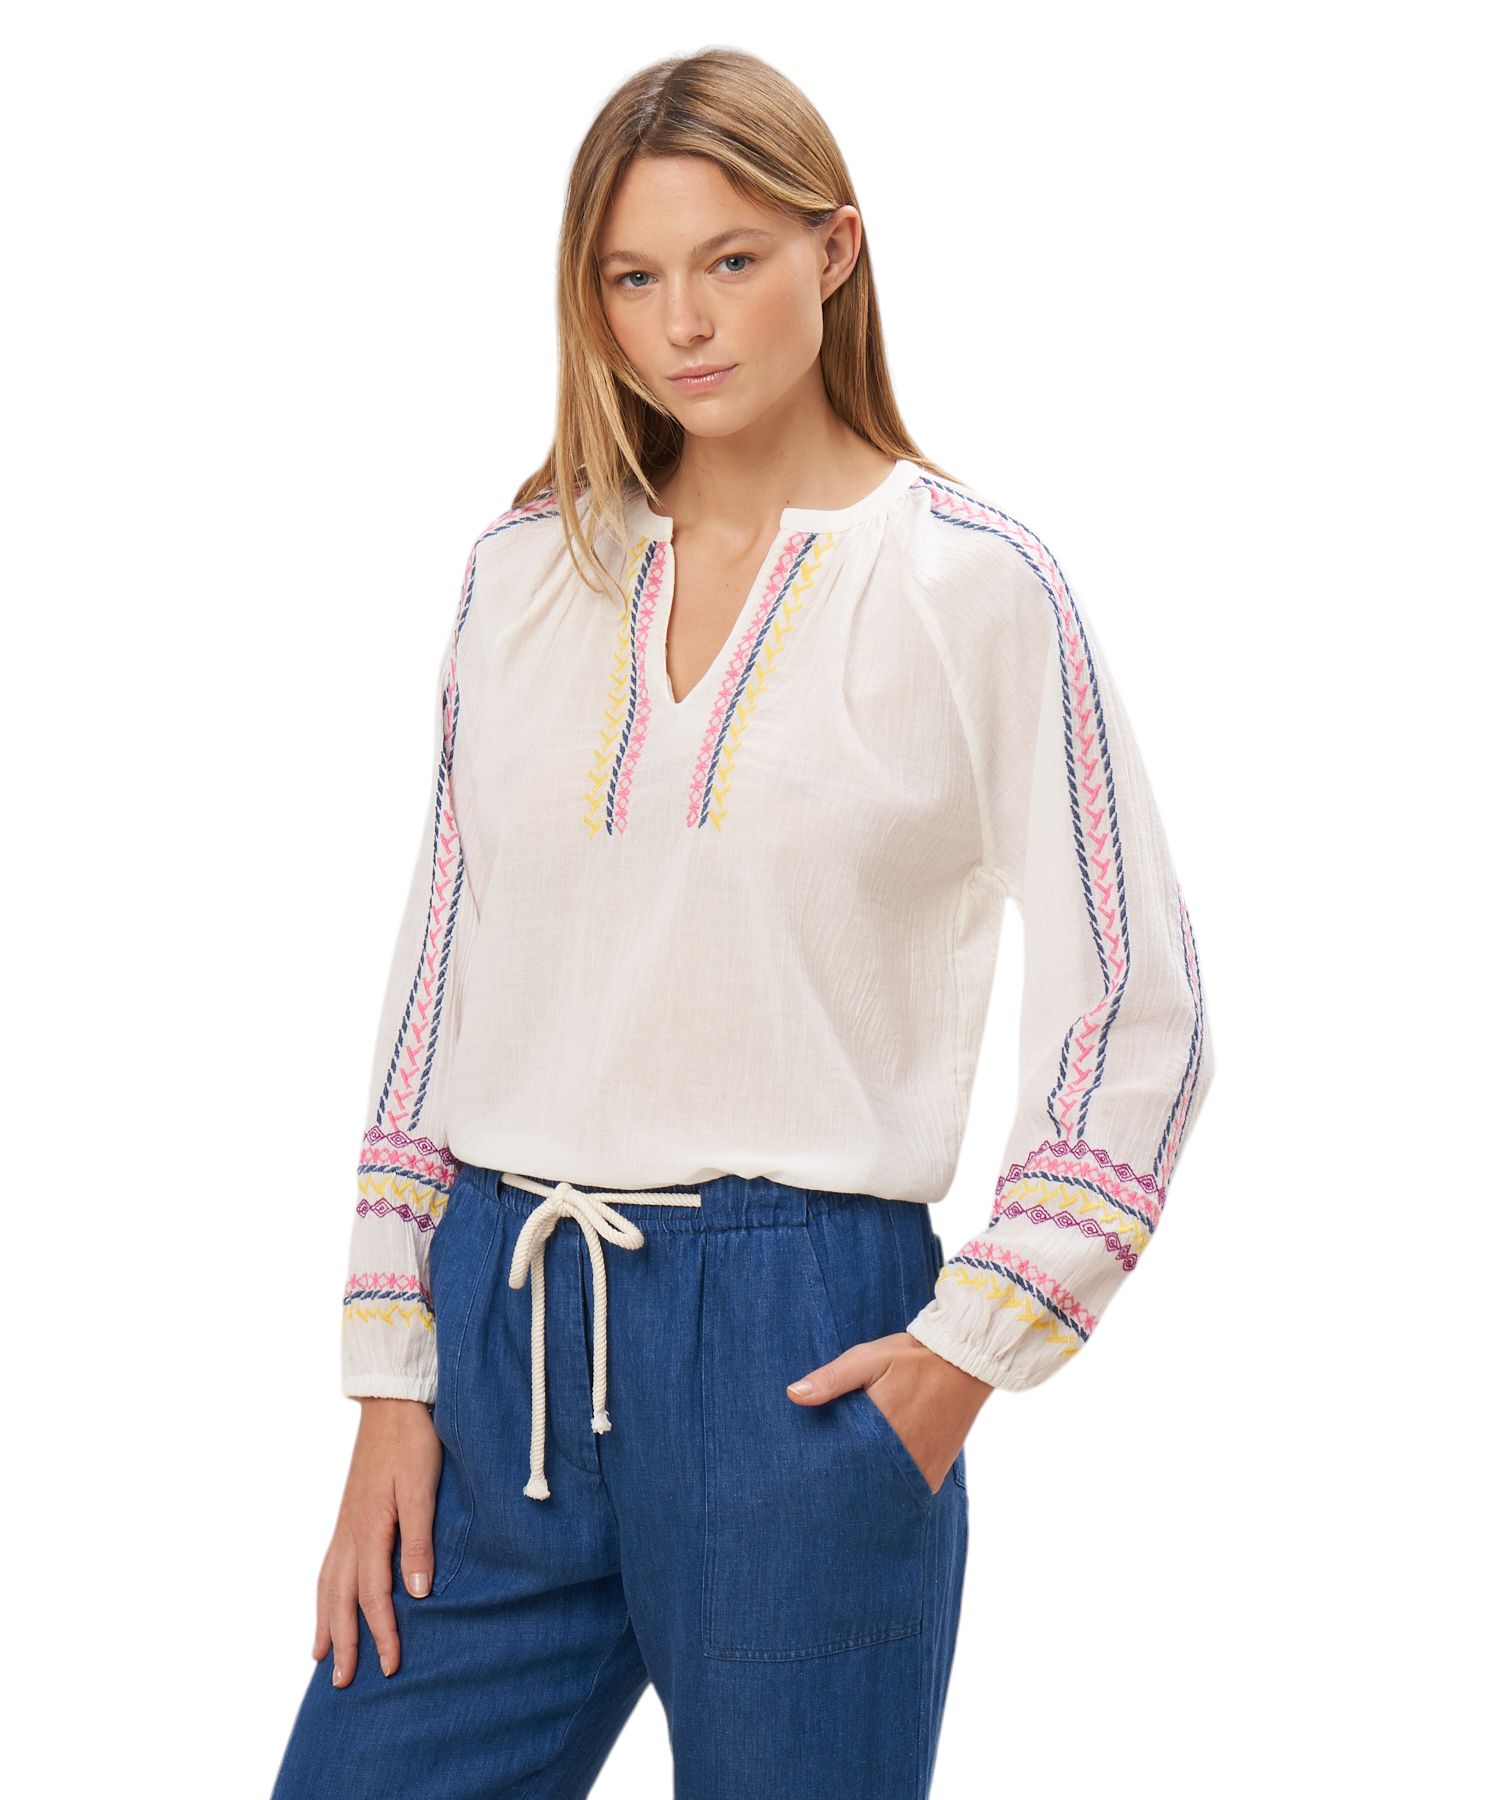 Women's Hirman Shirt Off White/Multicolor 